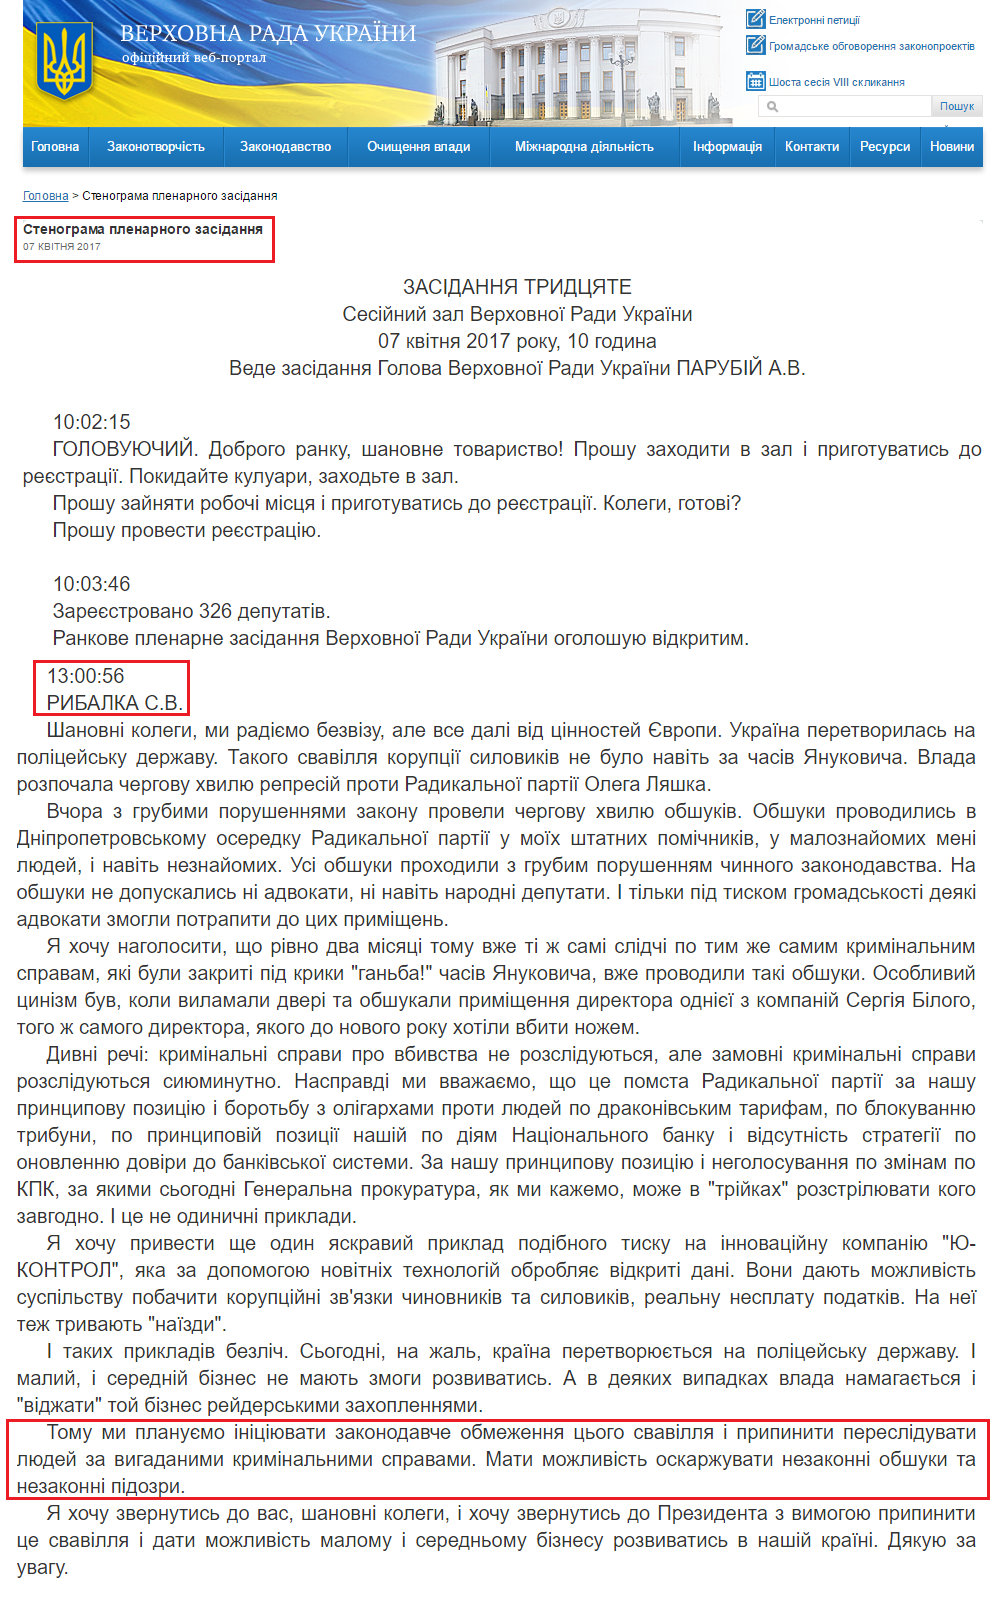 http://iportal.rada.gov.ua/meeting/stenogr/show/6484.html